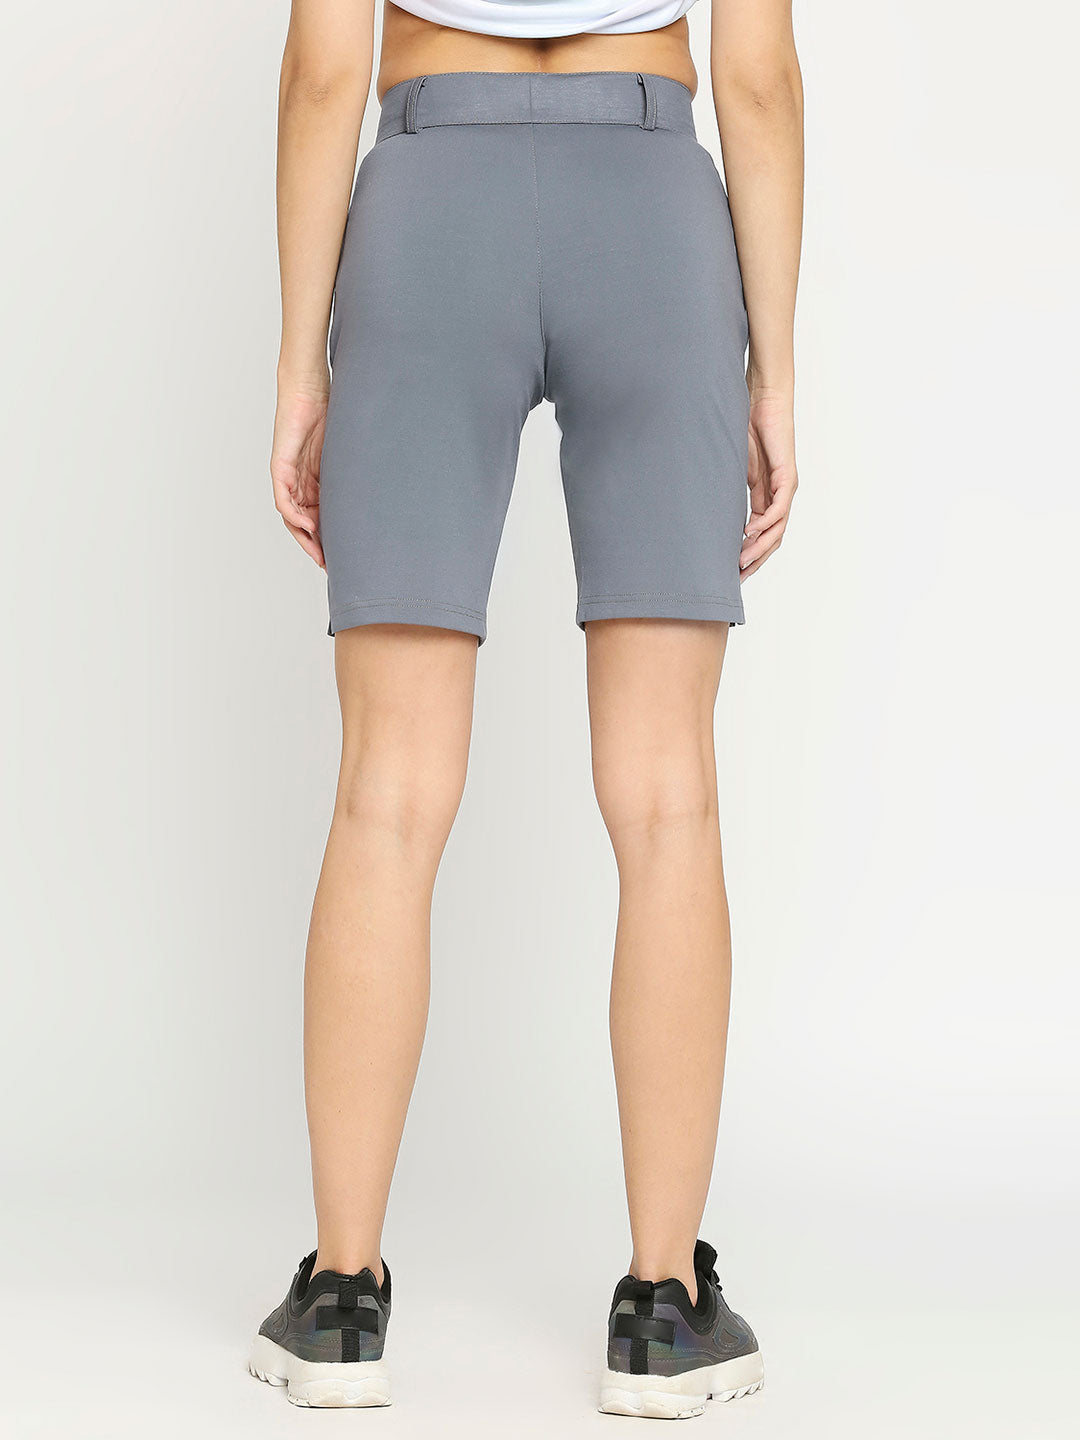 Women's Grey Golf Shorts with Welt Pockets - 1